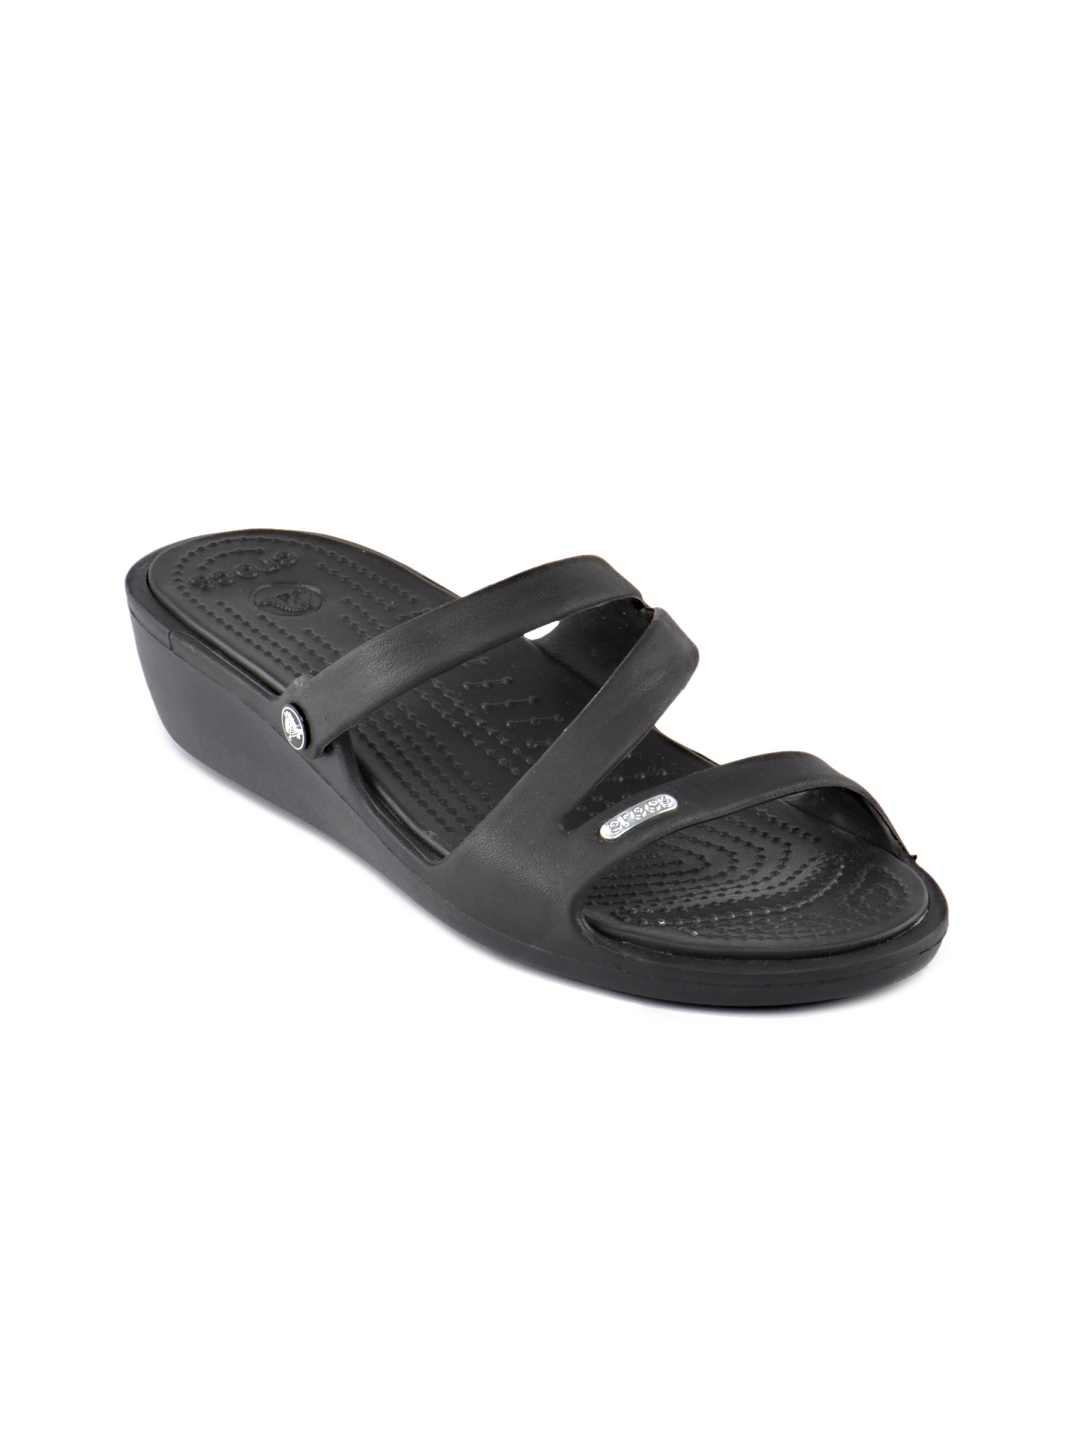 Buy Crocs Patricia Women Black Sandal - Flip Flops for Women 16248 | Myntra